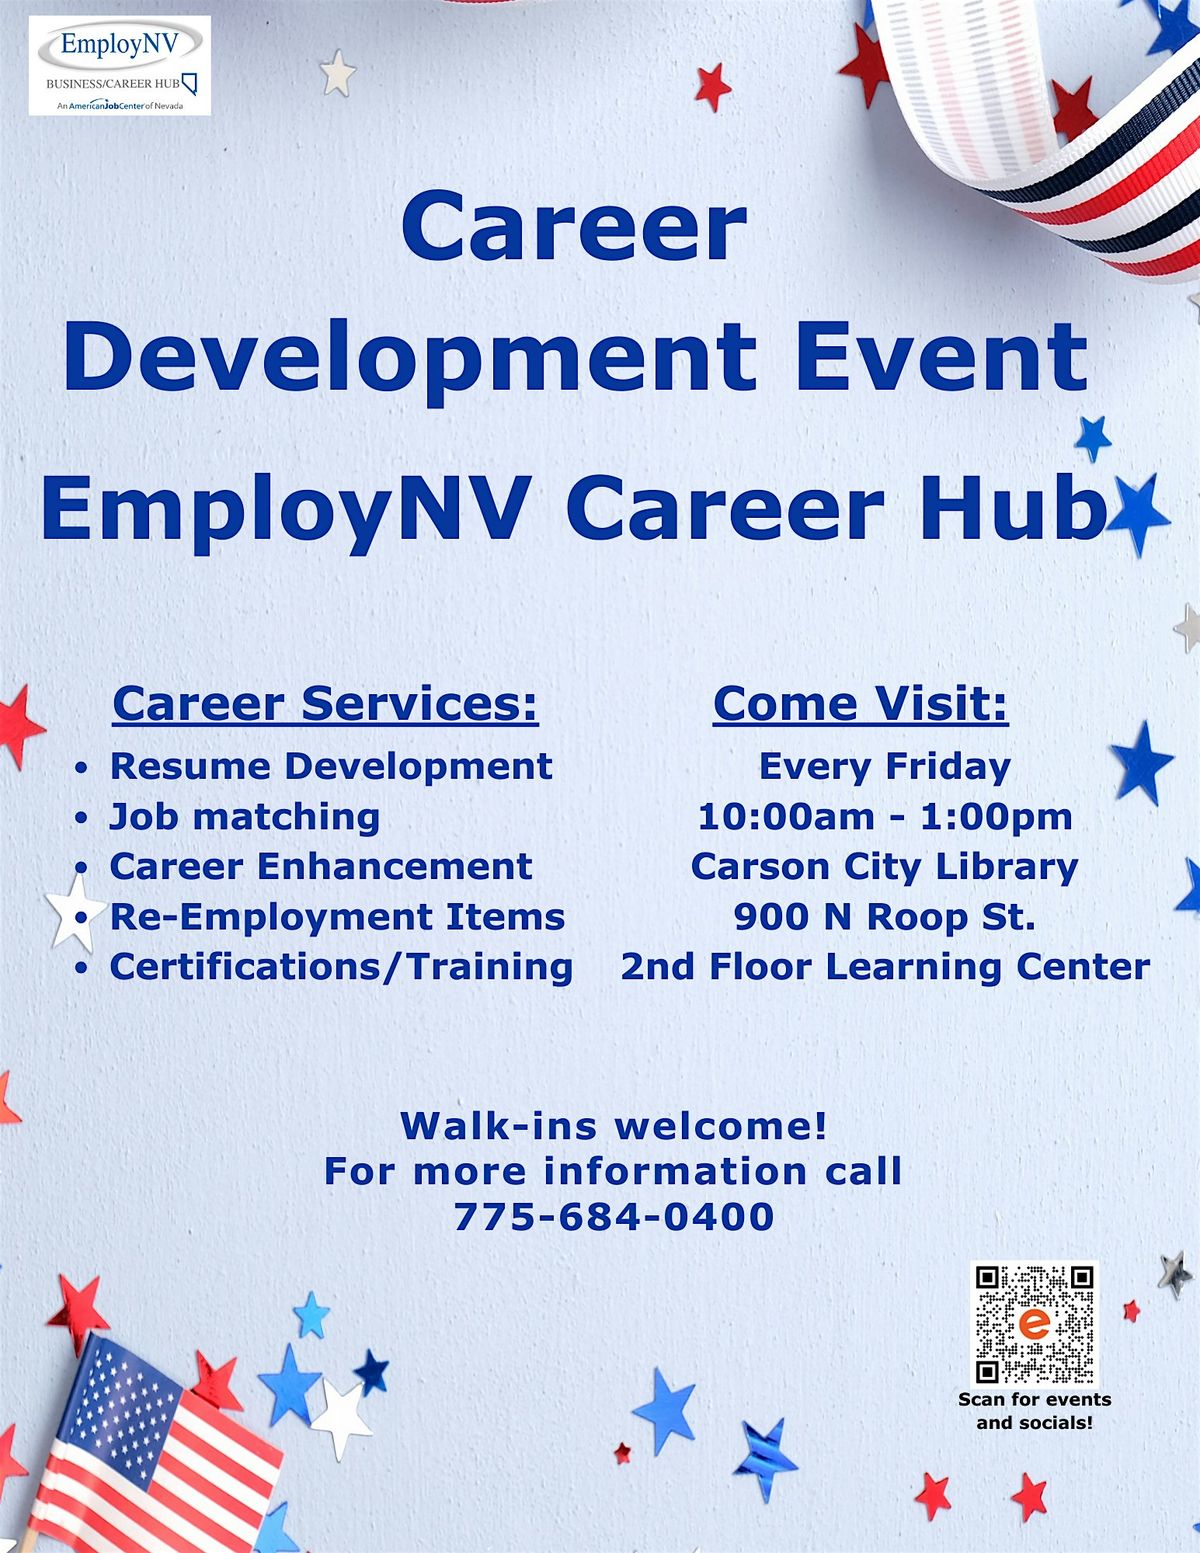 CARSON CITY, NV - Career Development Event